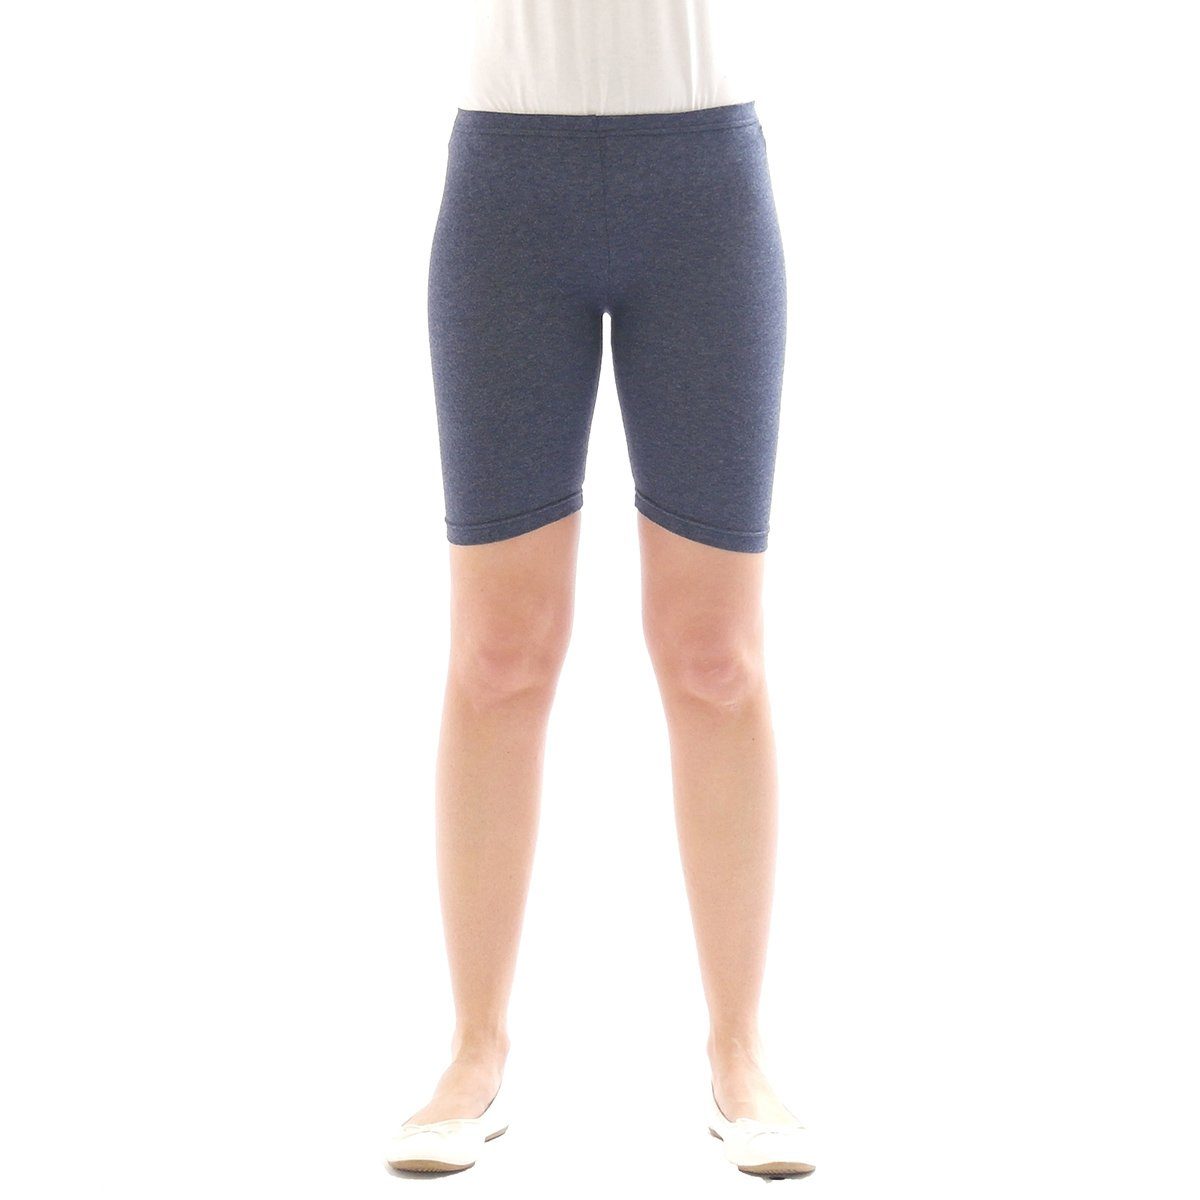 jeans Shorts Mädchen Kinder SYS Baumwolle Jungen Shorts 1/2 Sport Pants